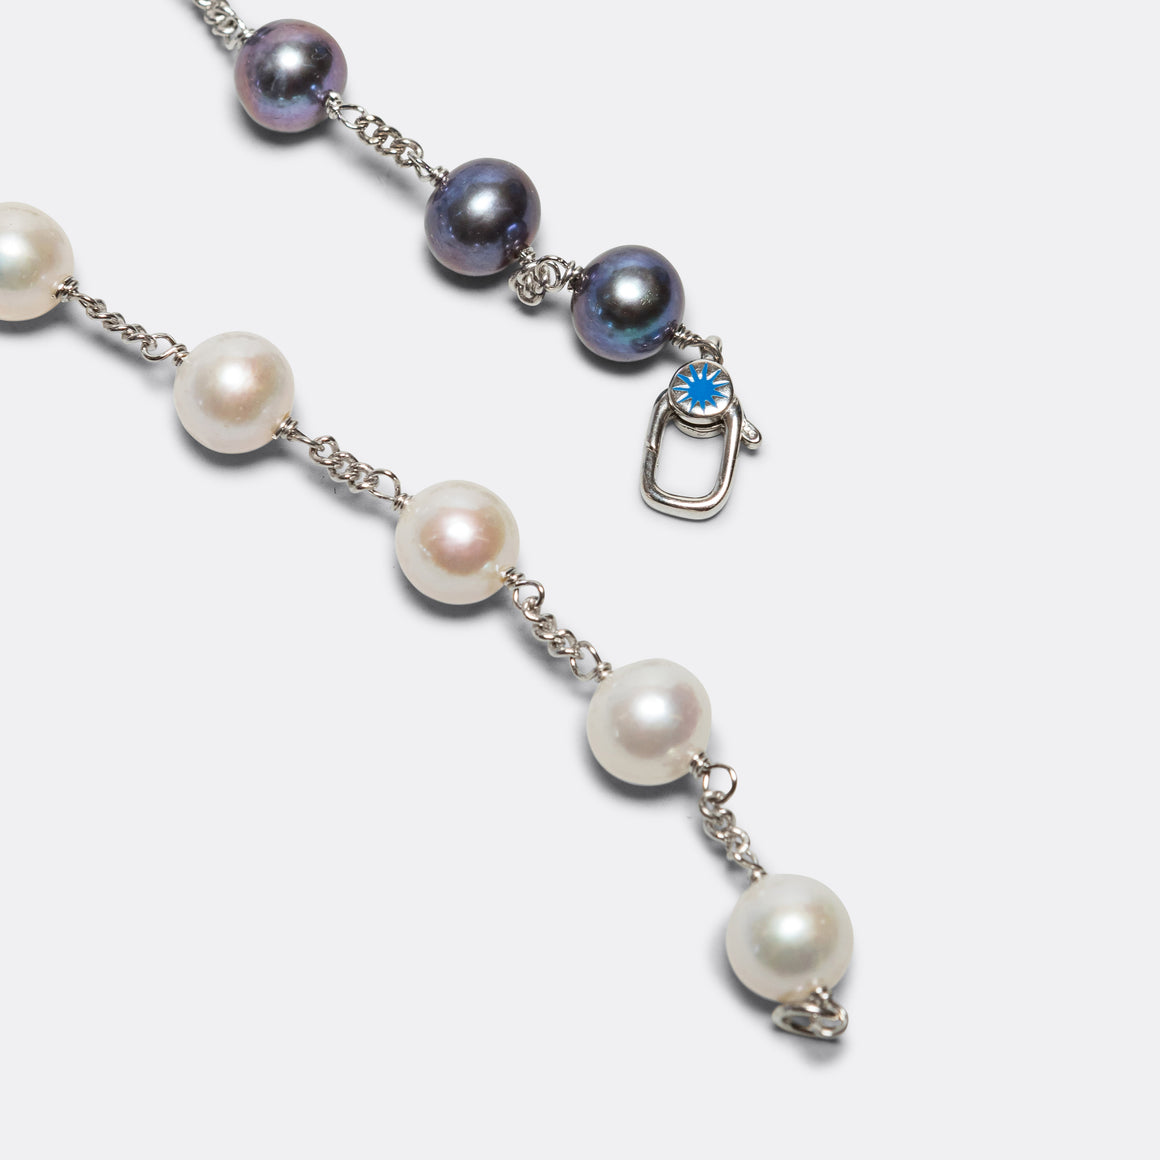 Wisdom Pearl Necklace - 925 Silver